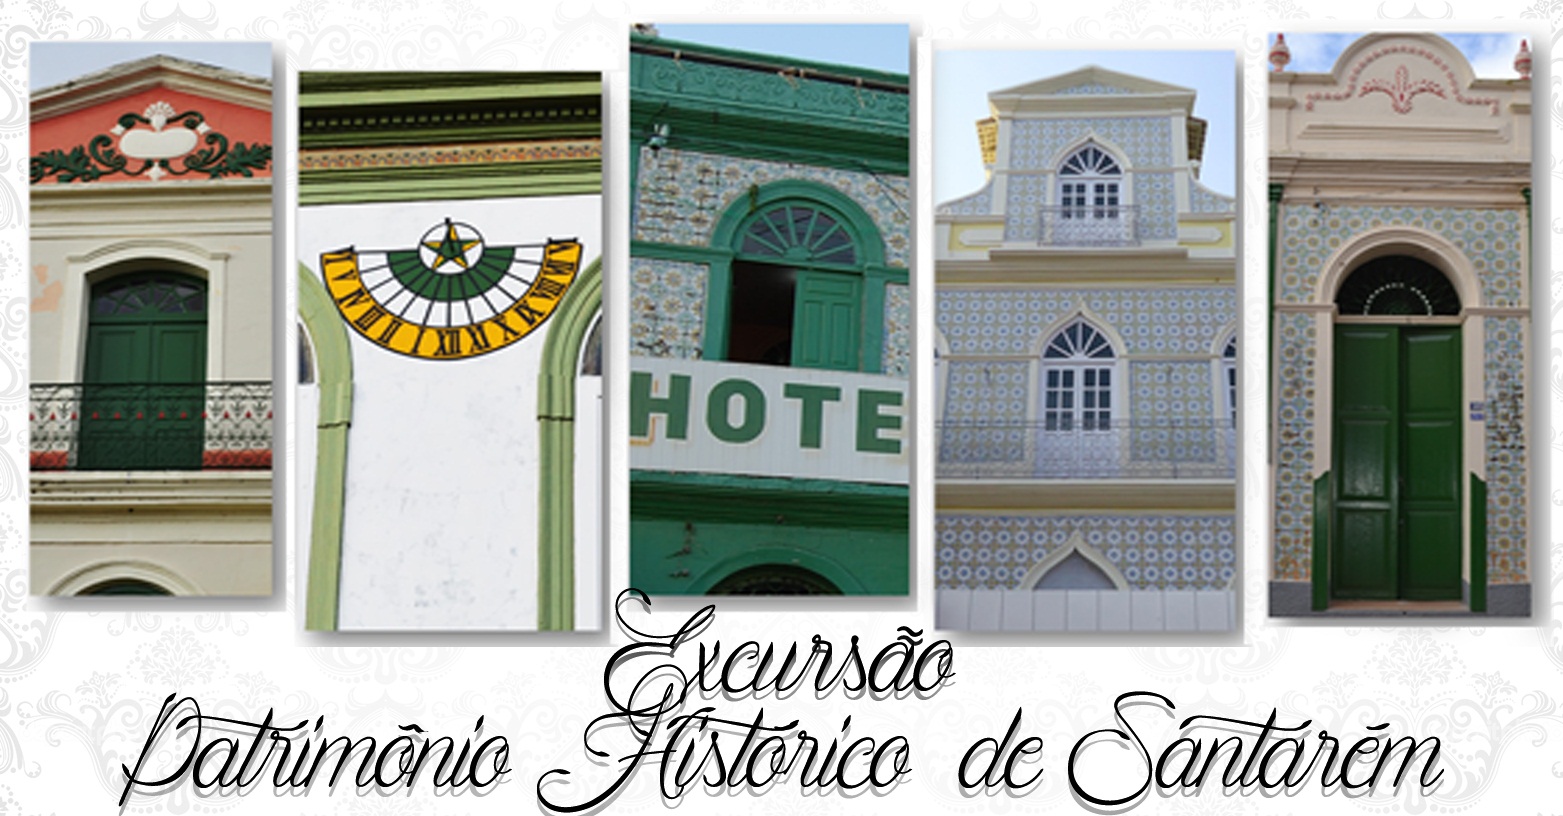 Projeto promove Excursão Patrimônio Histórico de Santarém dia 22